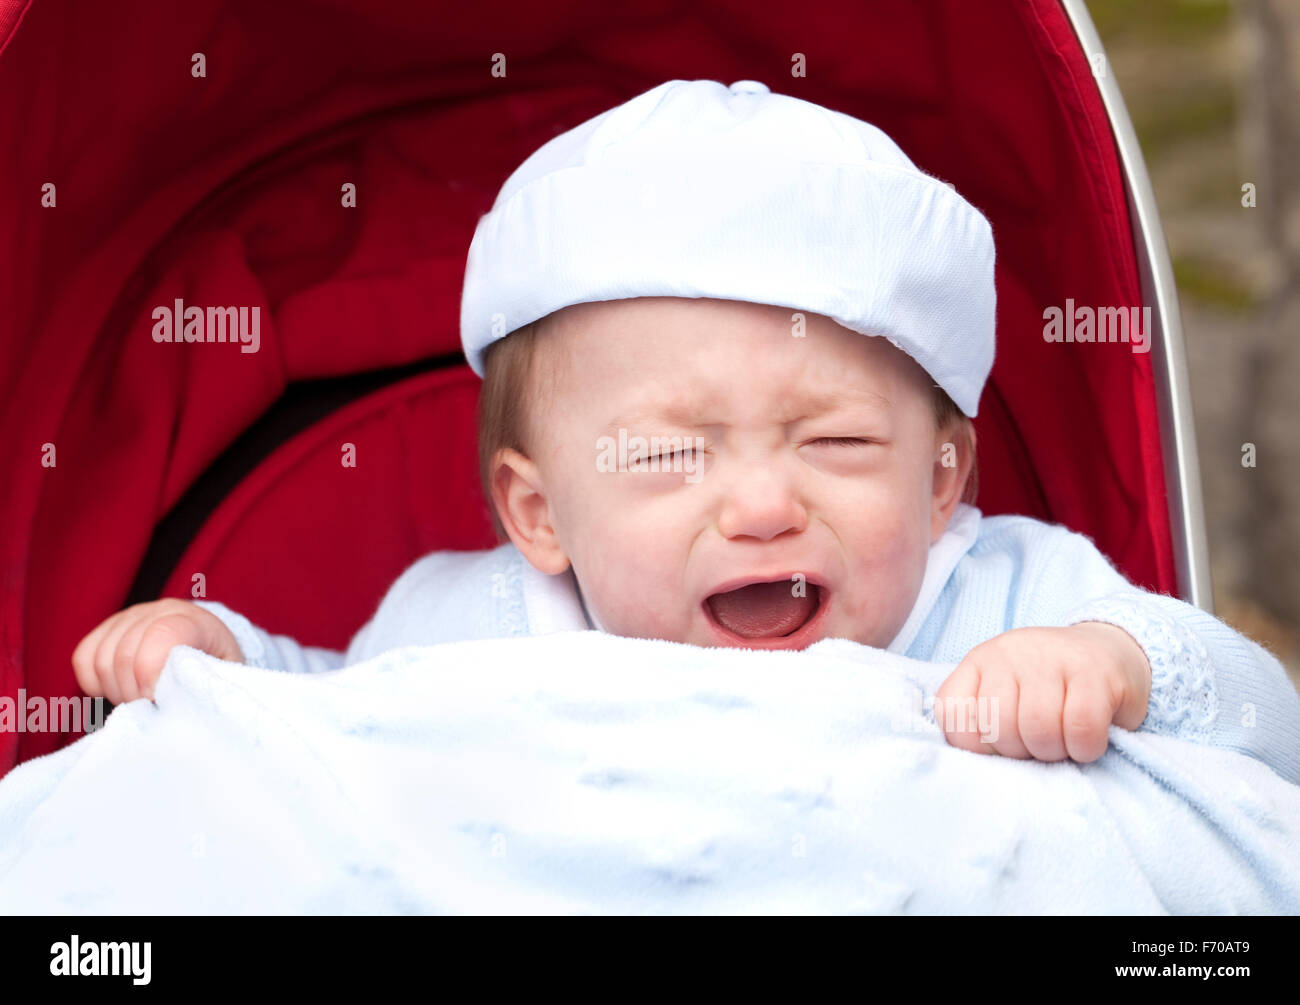 baby cries in pram